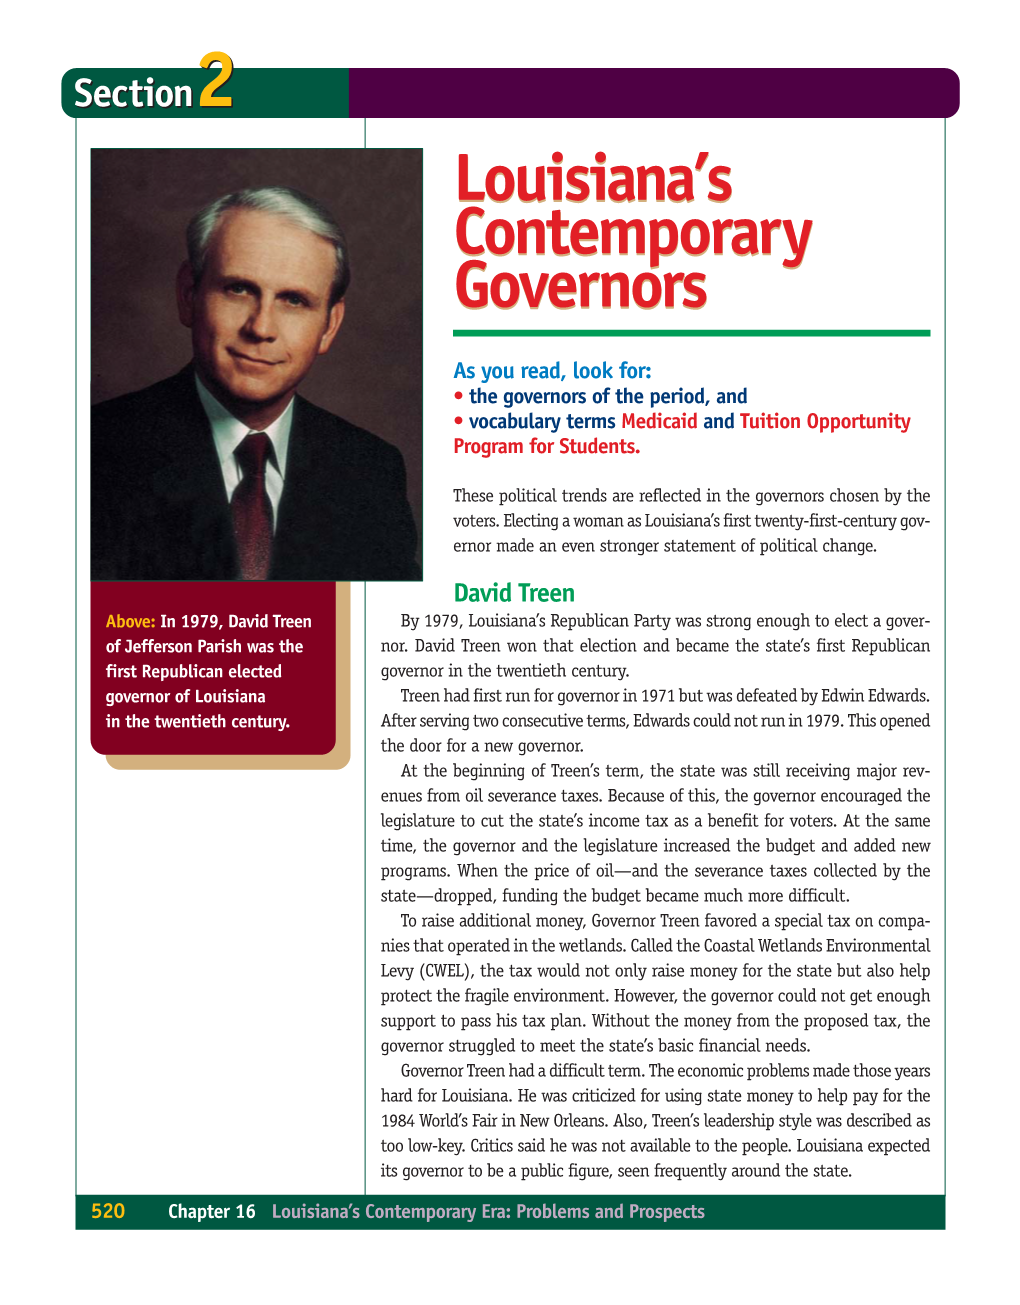 Louisiana's Contemporary Governors